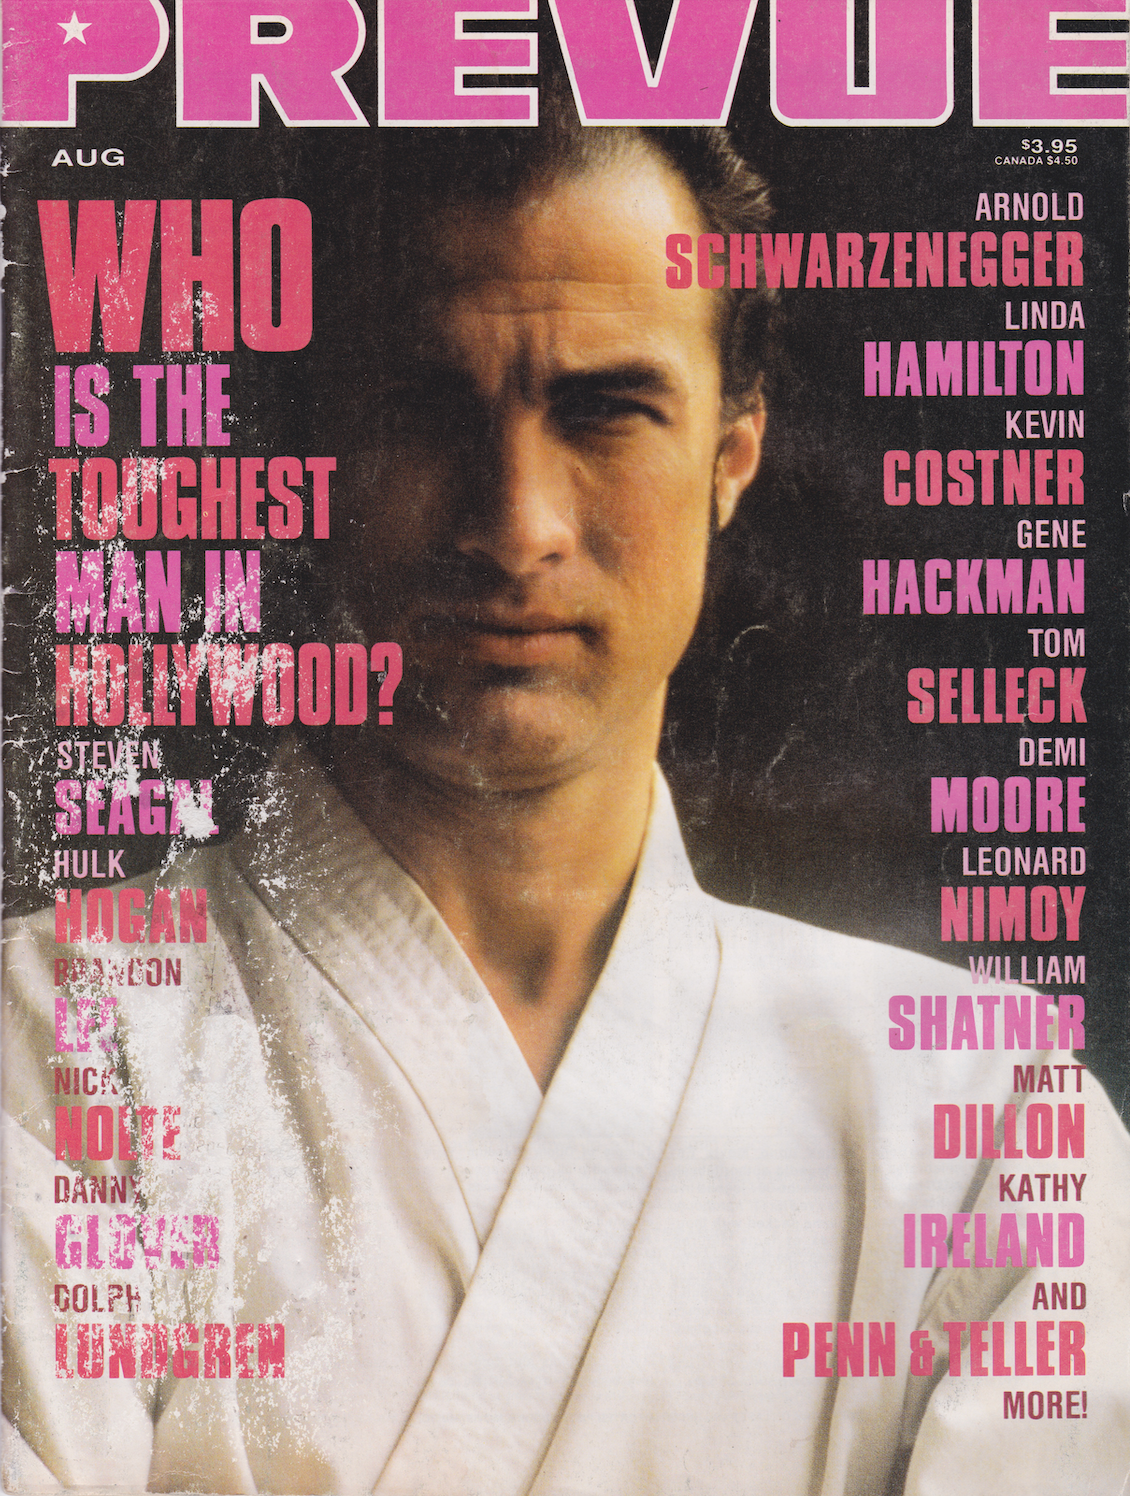 Prevue Magazine Aug 1991 with Steven Seagal (Preowned) - Budovideos